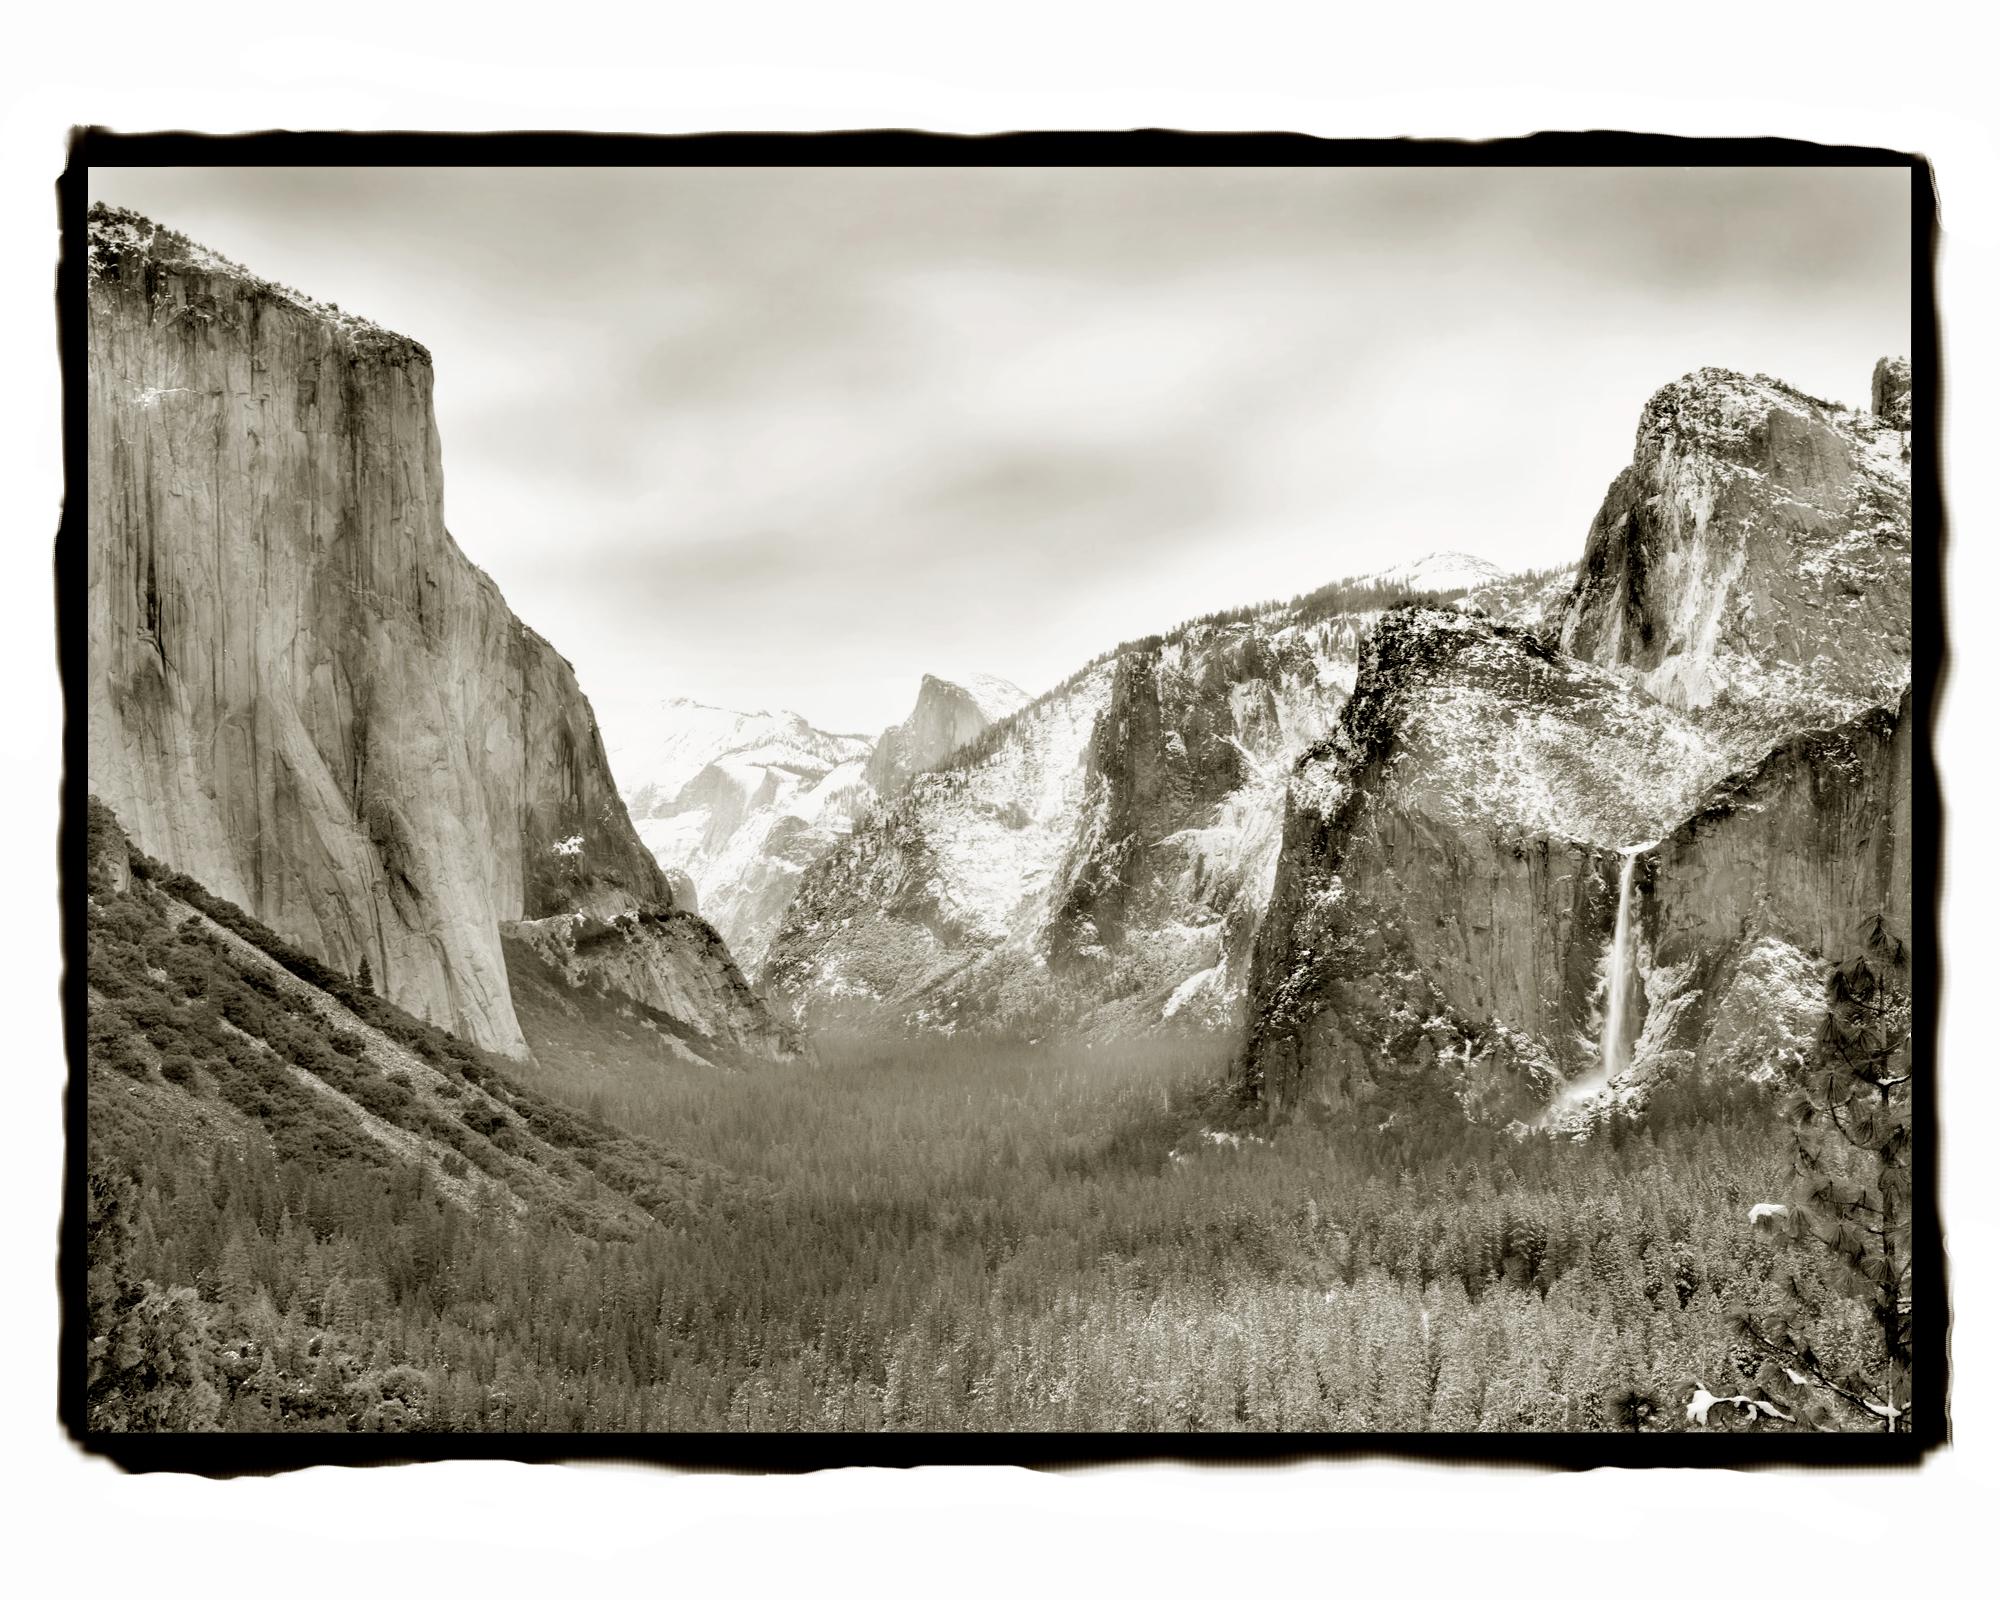 Ludo Leideritz Landscape Photograph - Yosemite from Inspiration Point